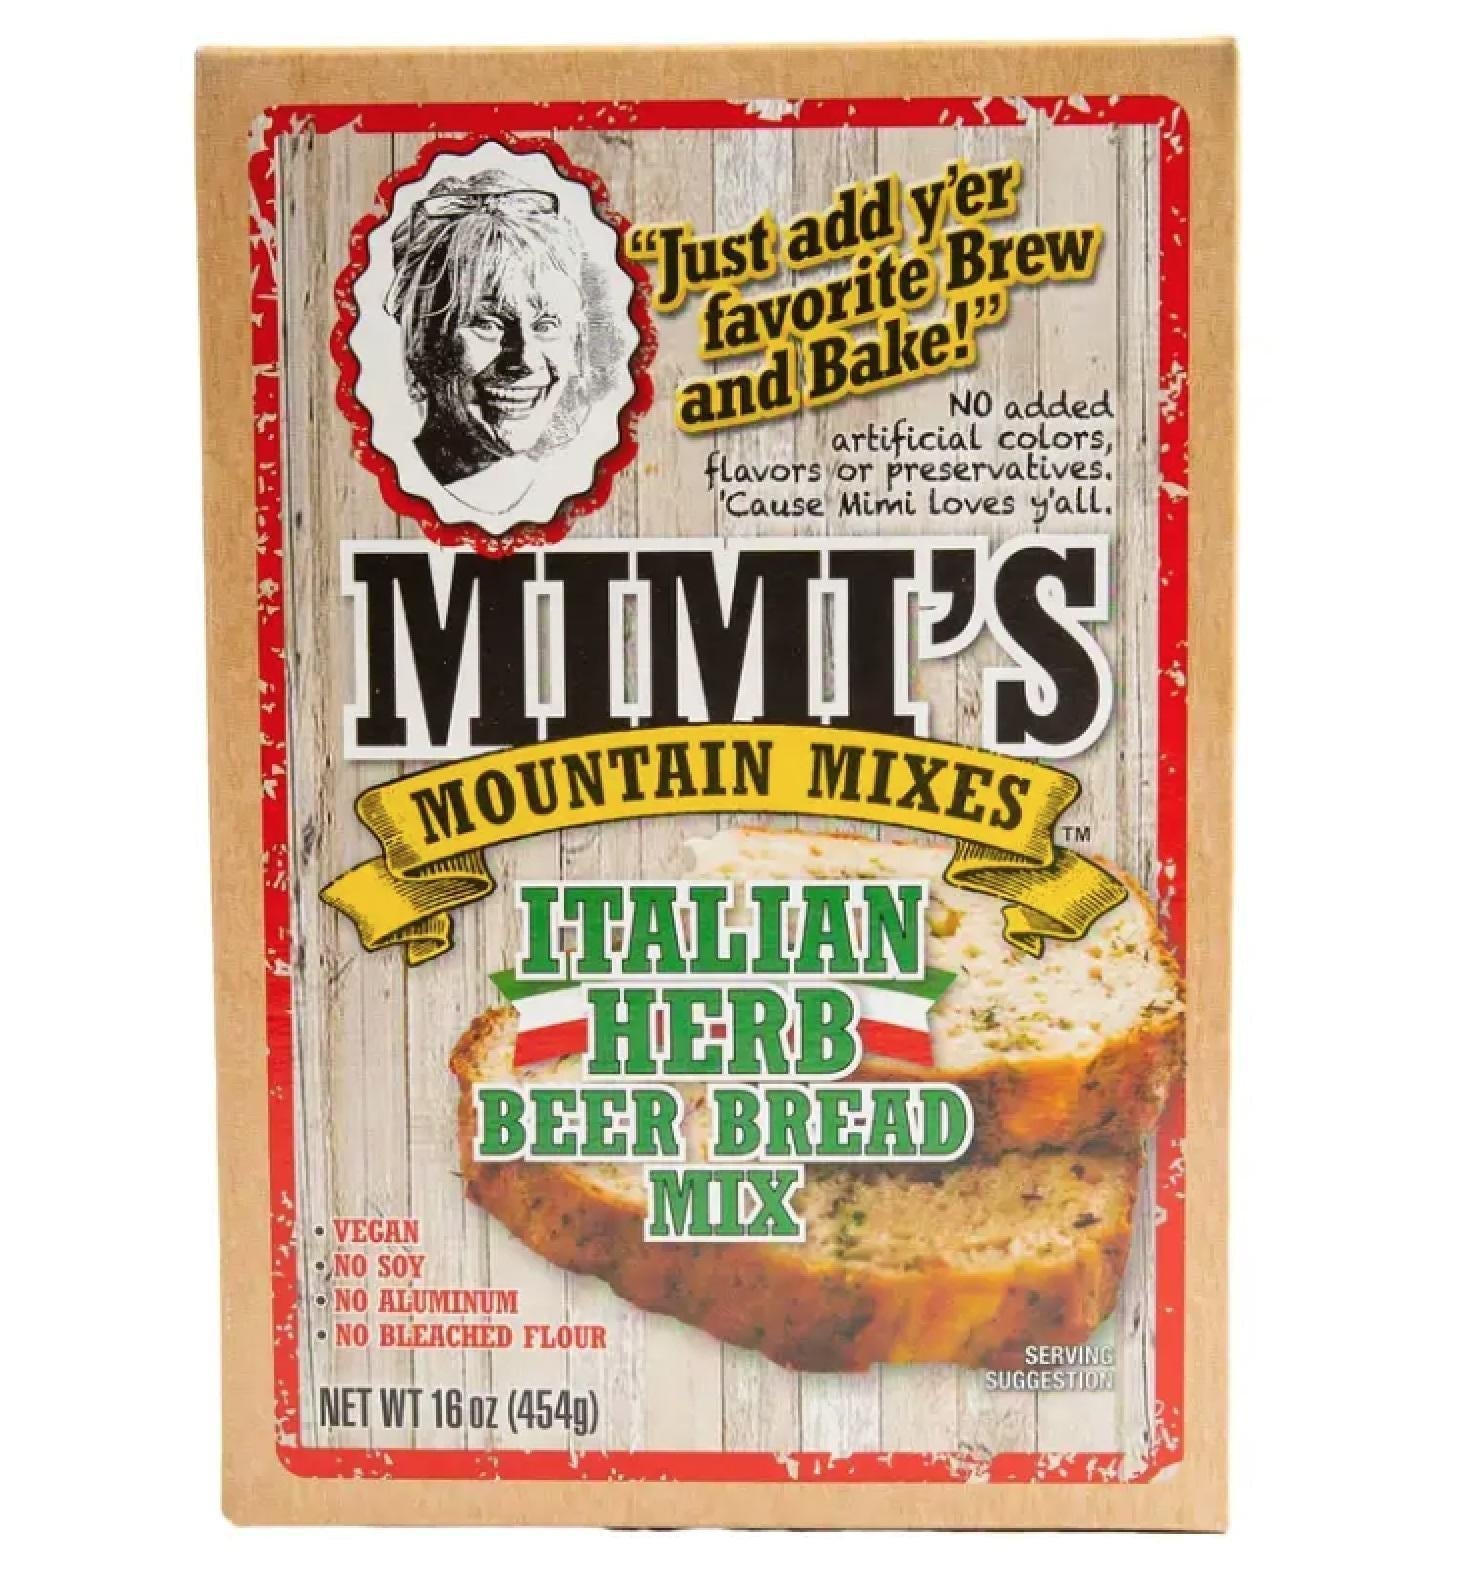 Mimi's Mountain Mixes| Italian Herb Beer Bread Mix